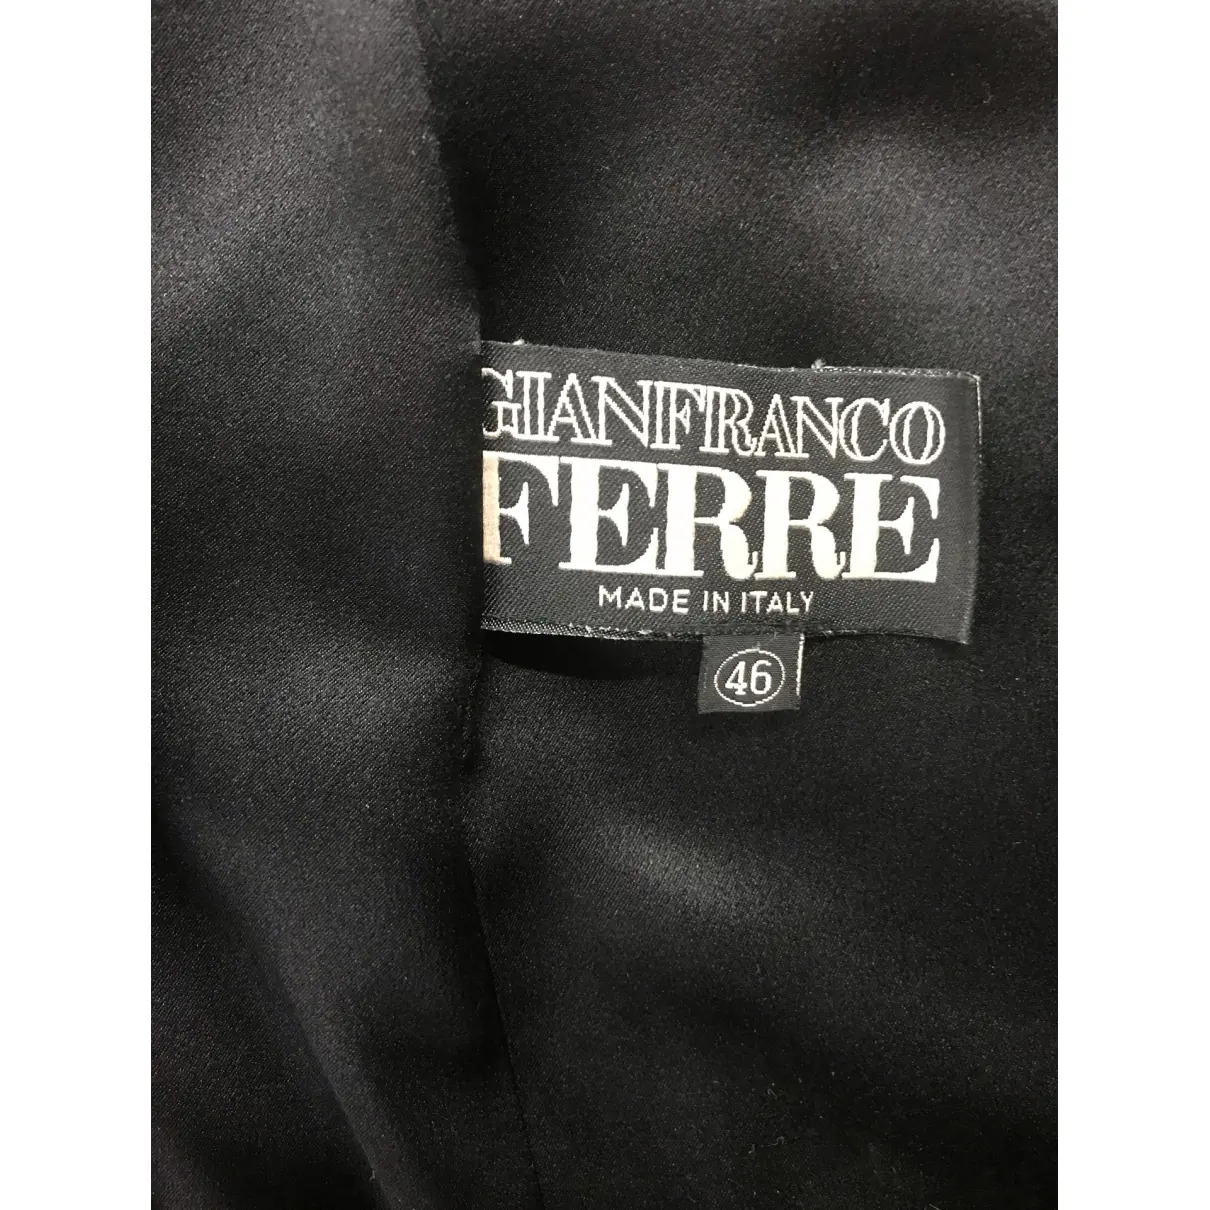 Wool coat Gianfranco Ferré - Vintage